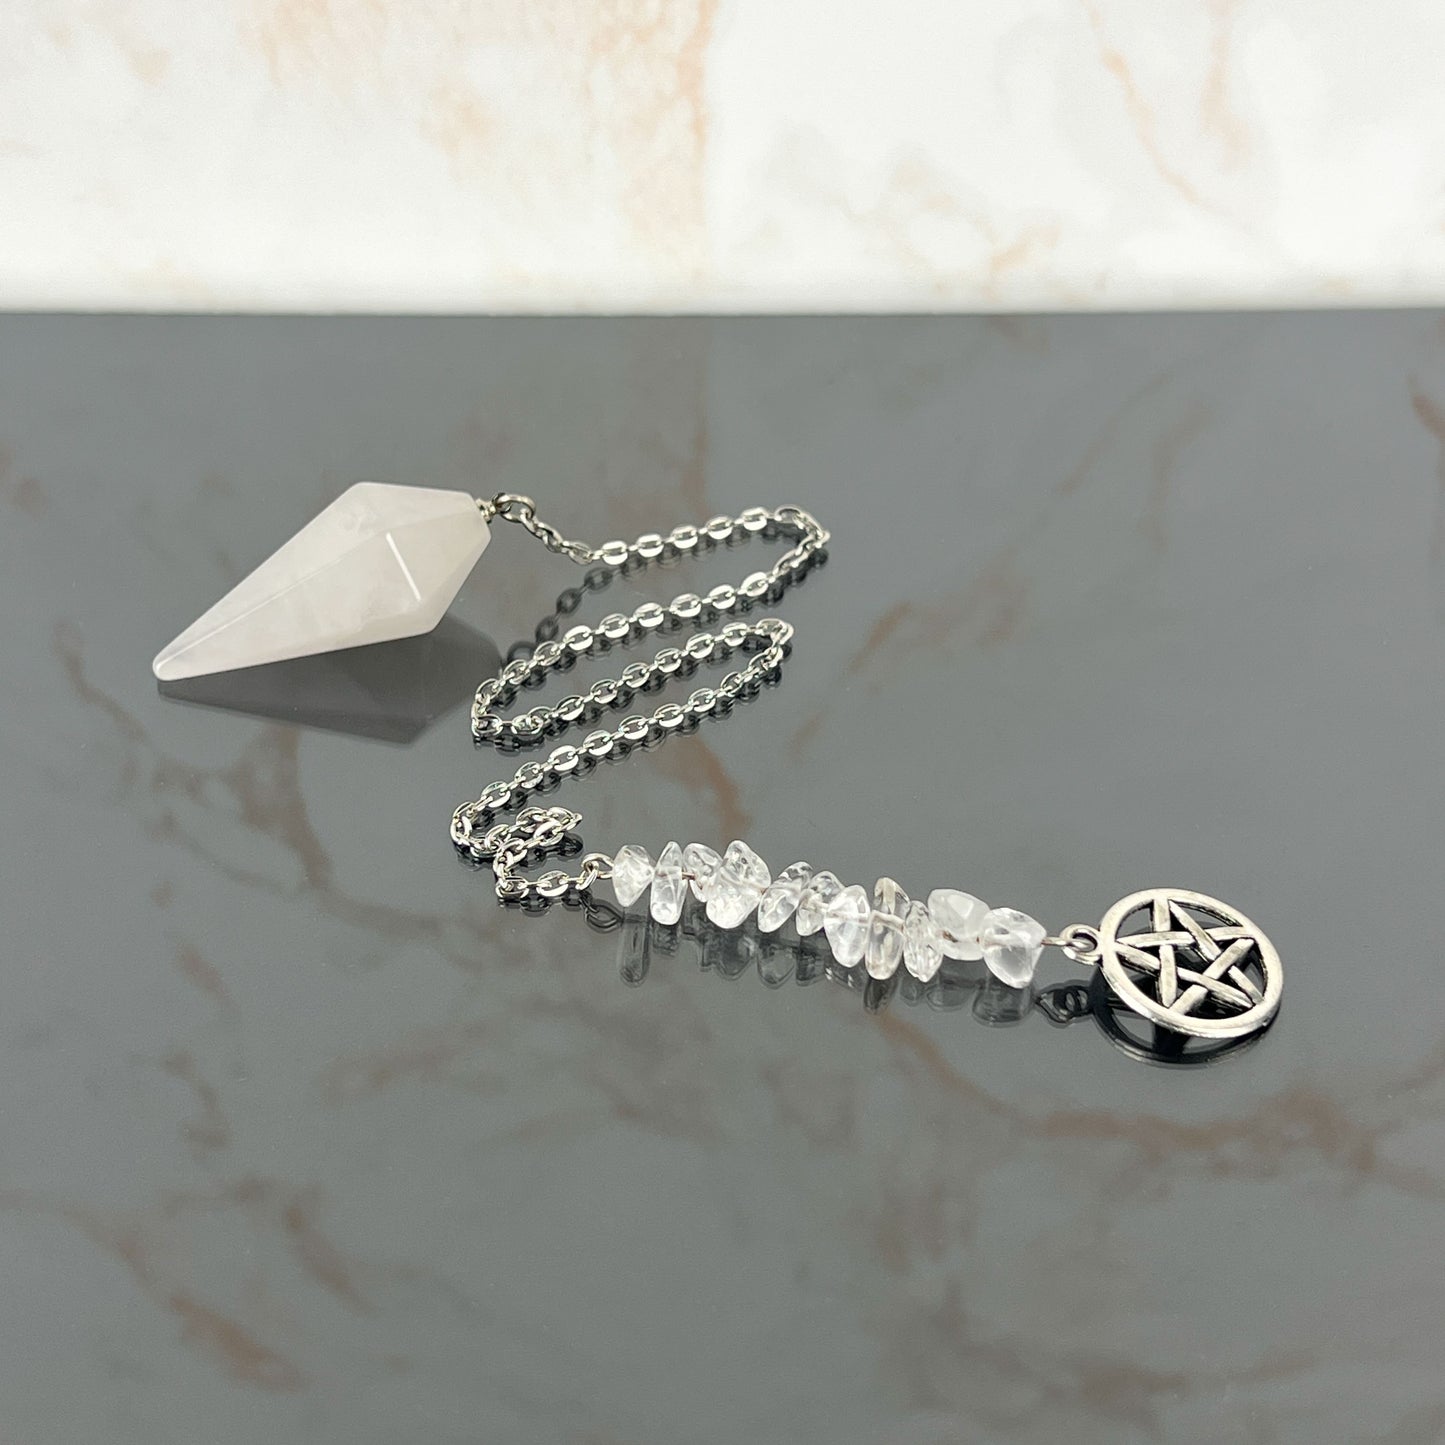 Clear quartz and pagan wiccan pentacle pendulum